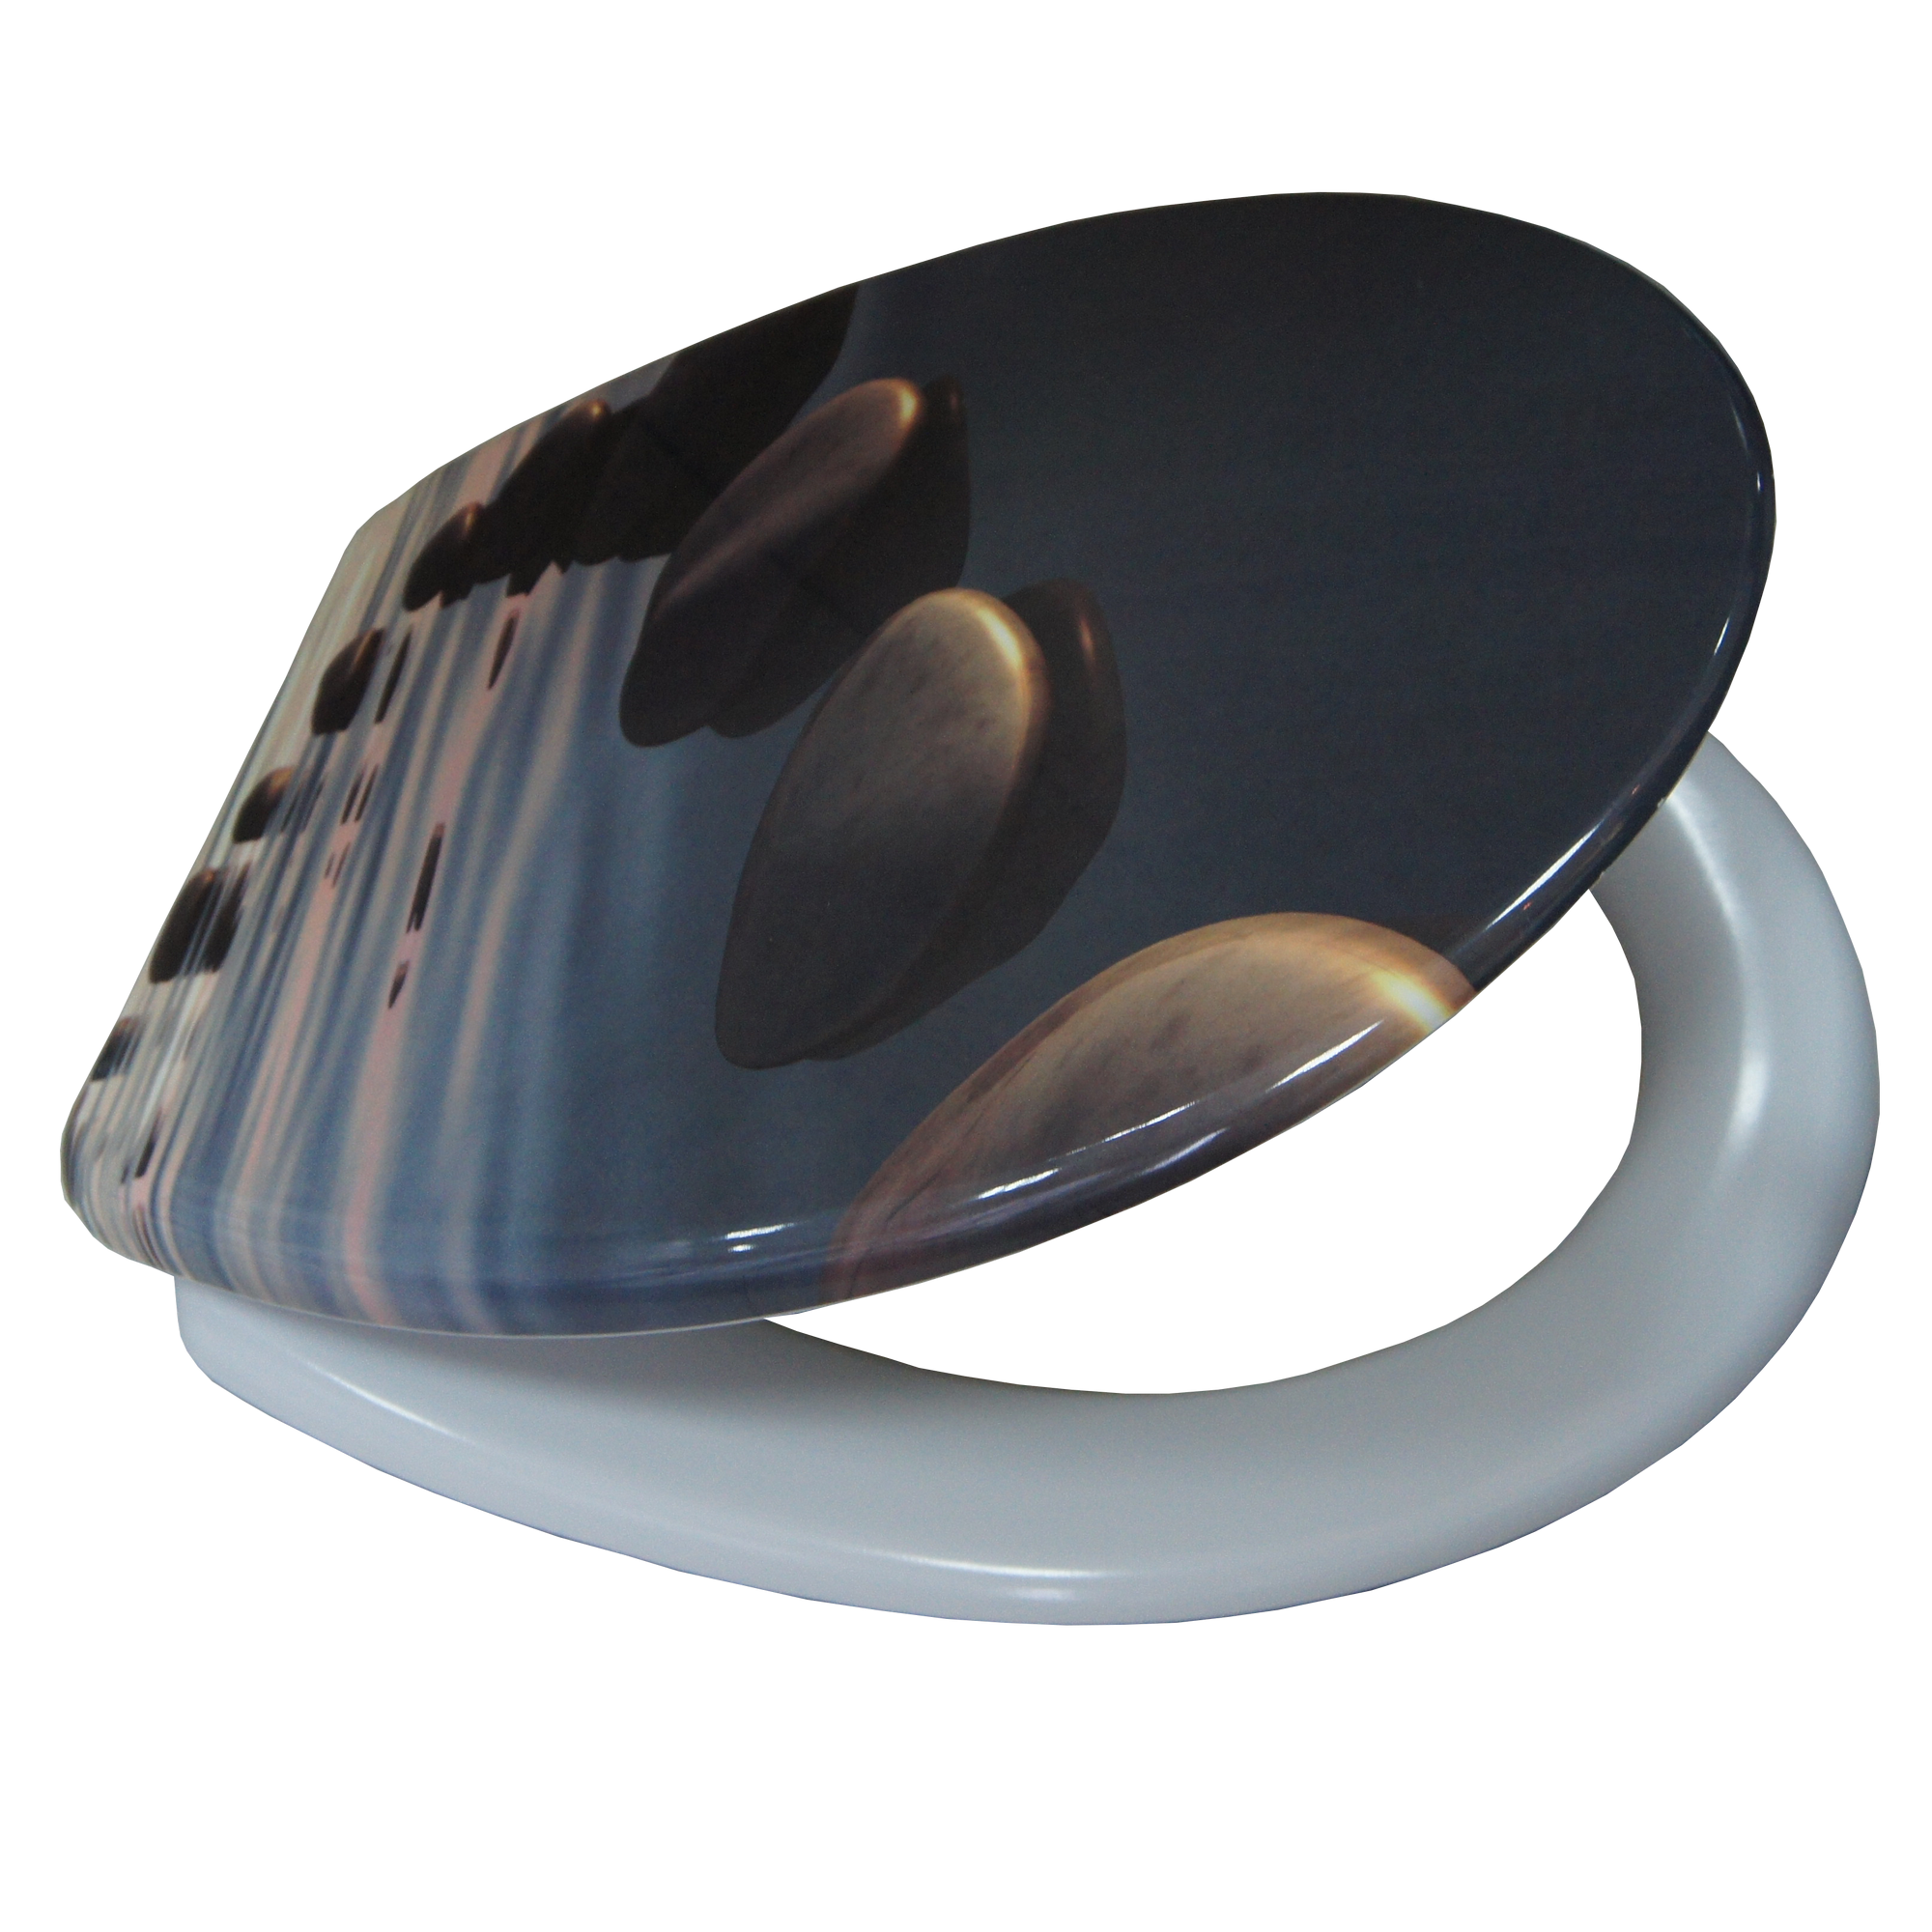 WC-Sitz 'Steine' mit Absenkautomatik grau 45 x 37,6 cm + product picture